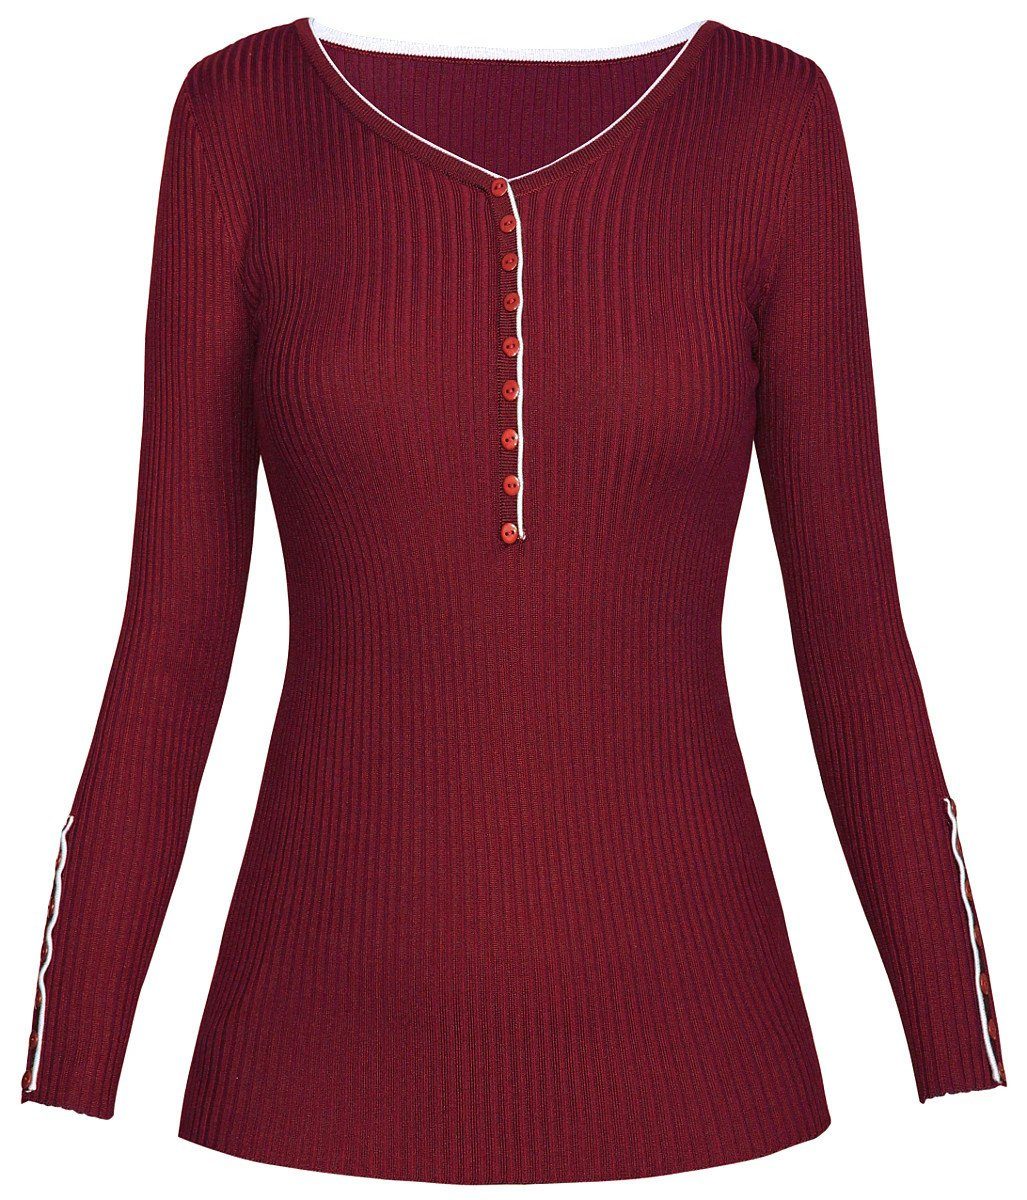 dy_mode V-Ausschnitt-Pullover Damen Pullover Enganliegend Rippenstrick Pulli mit V-Ausschnitt in Unifarbe PUL001-Weinrot